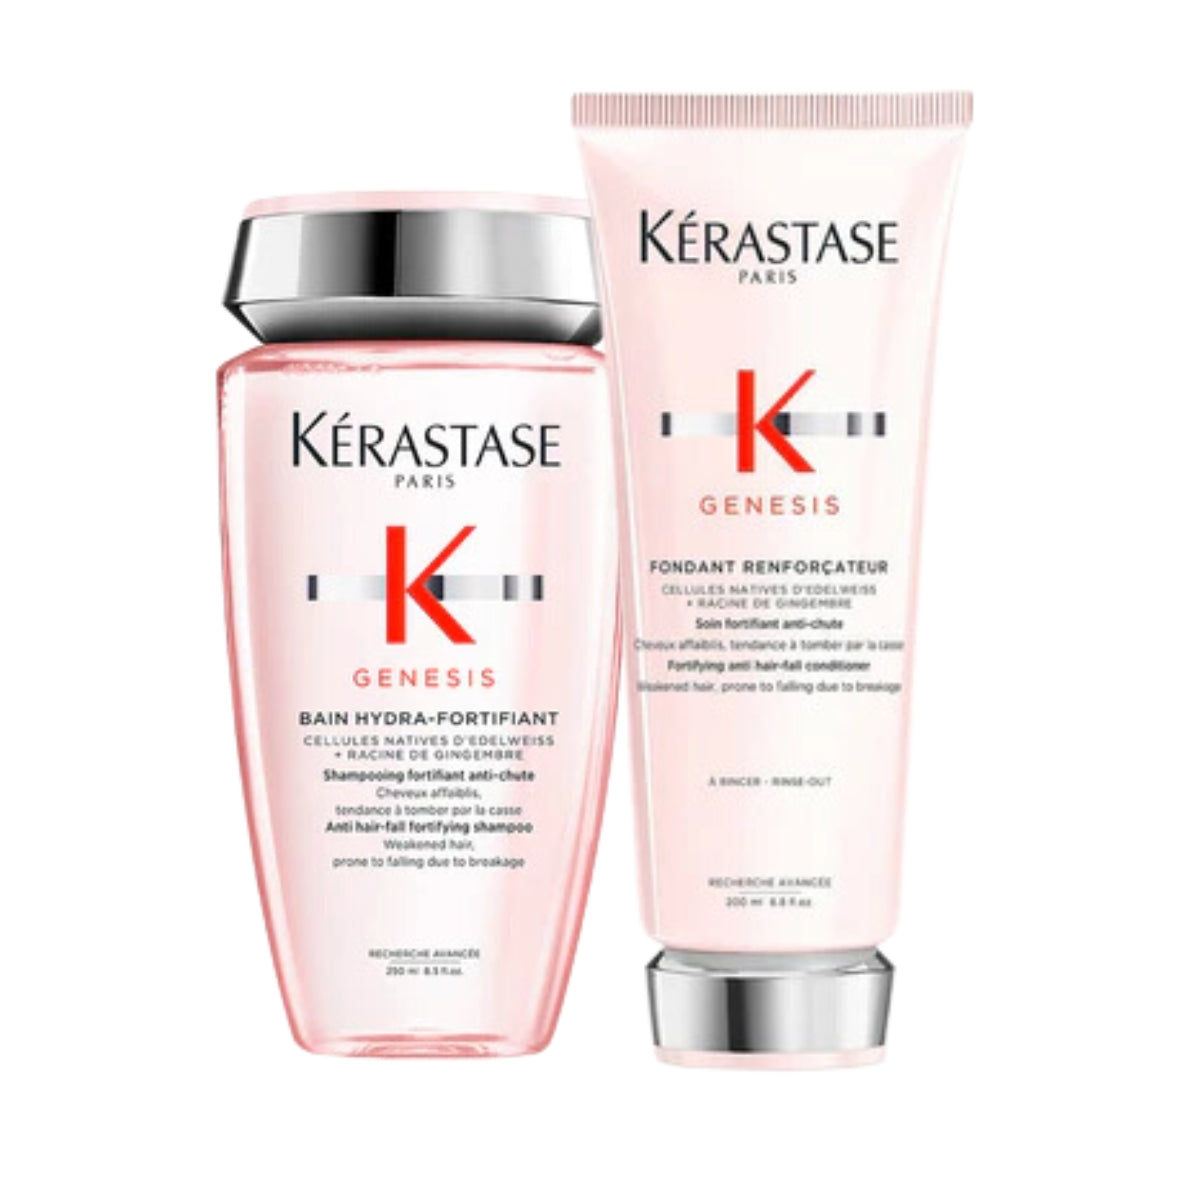 Kérastase Genesis Duo for Thin or Oily Hair SAVE 15%